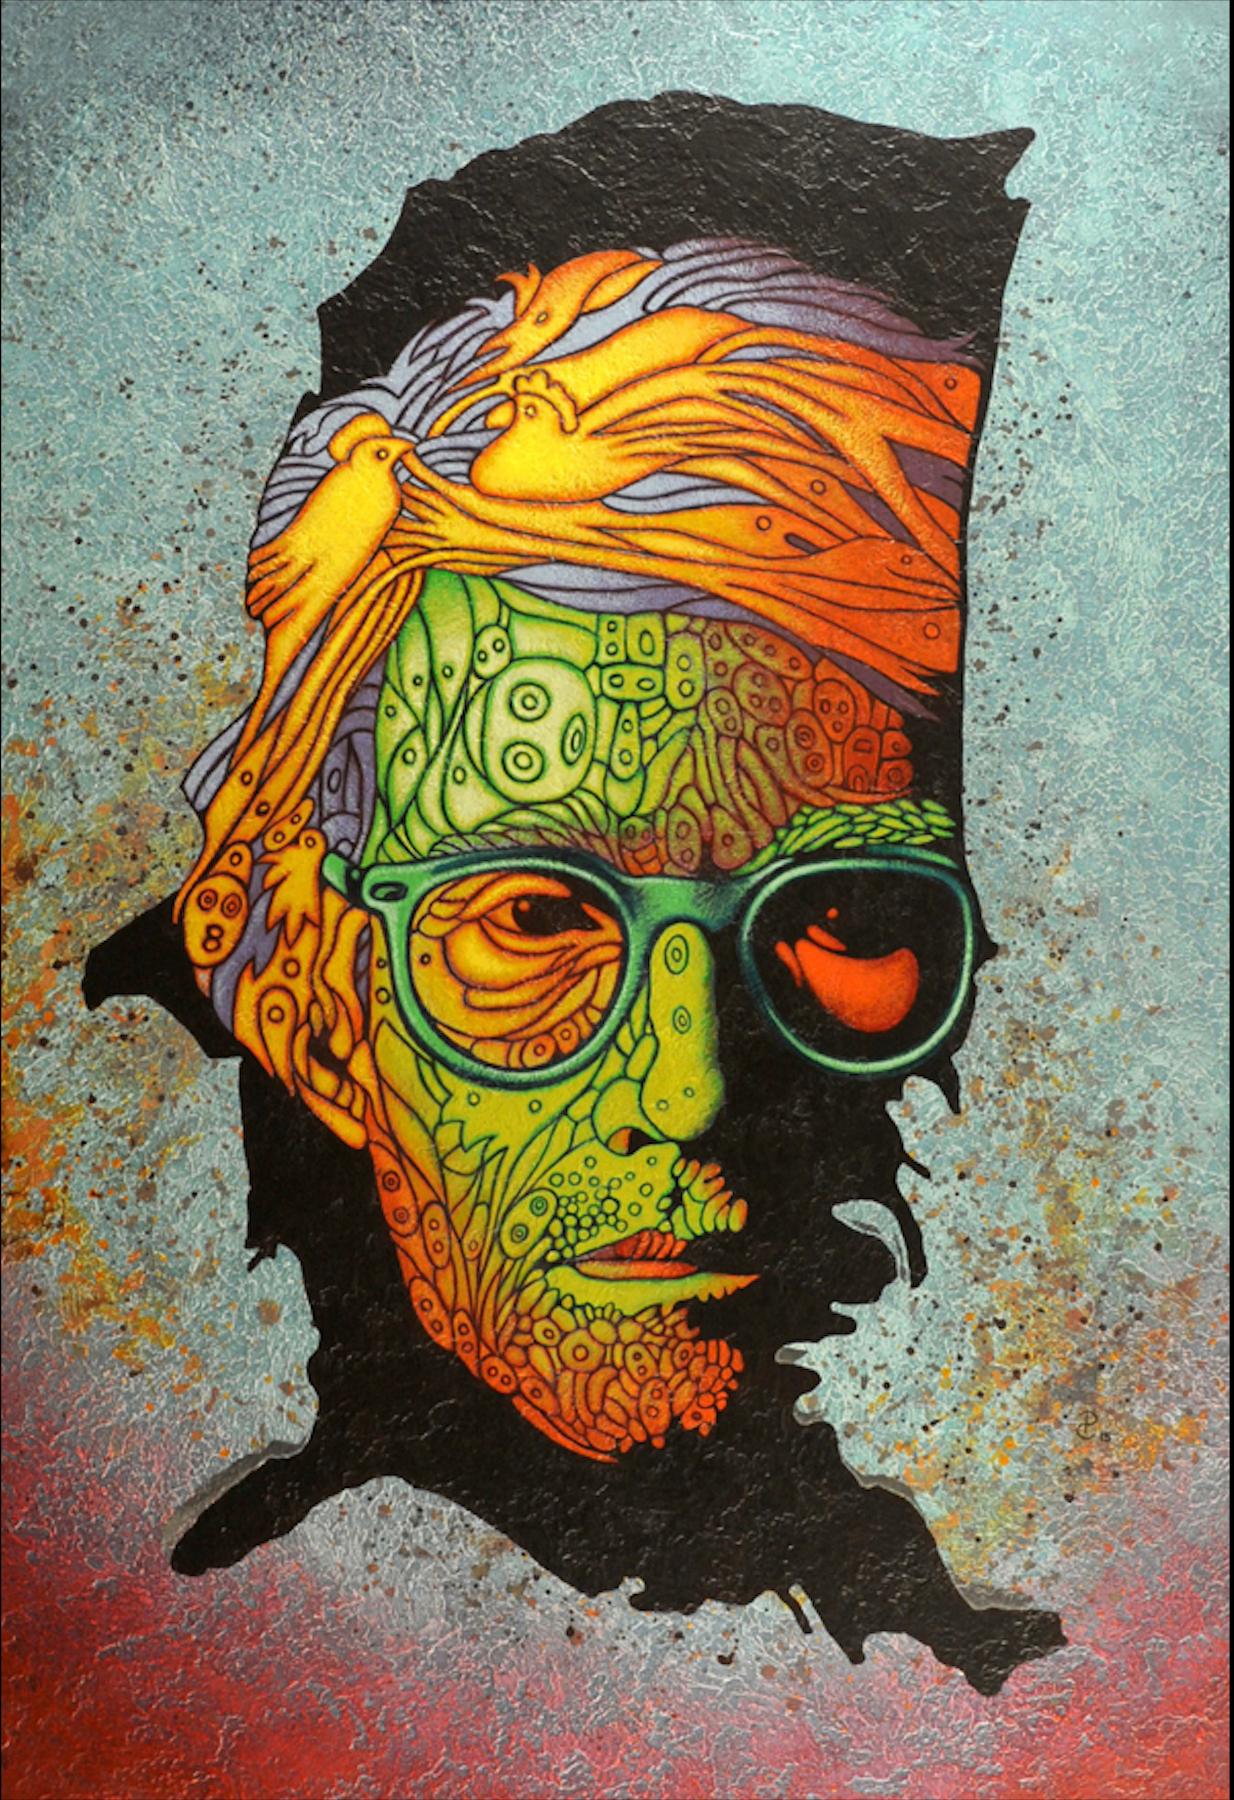 Andy Warhol's portrait 